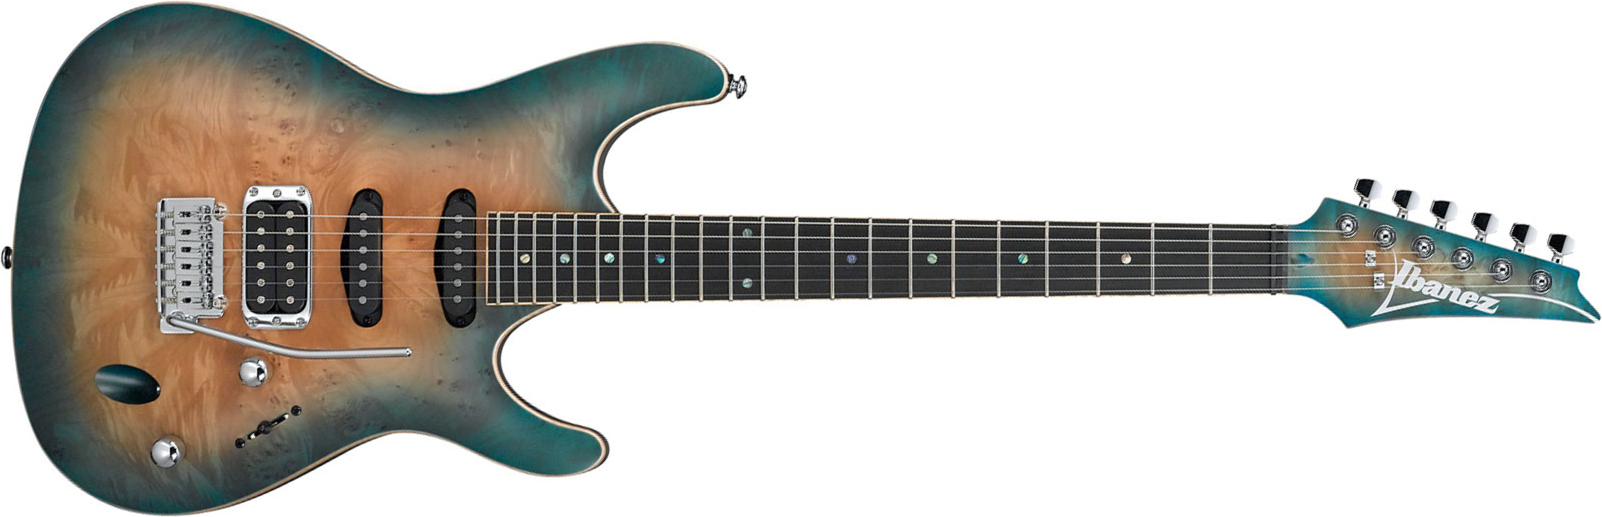 Ibanez Sa460mbw Sub Standard Hss Trem Eb - Sunset Blue Burst - Str shape electric guitar - Main picture